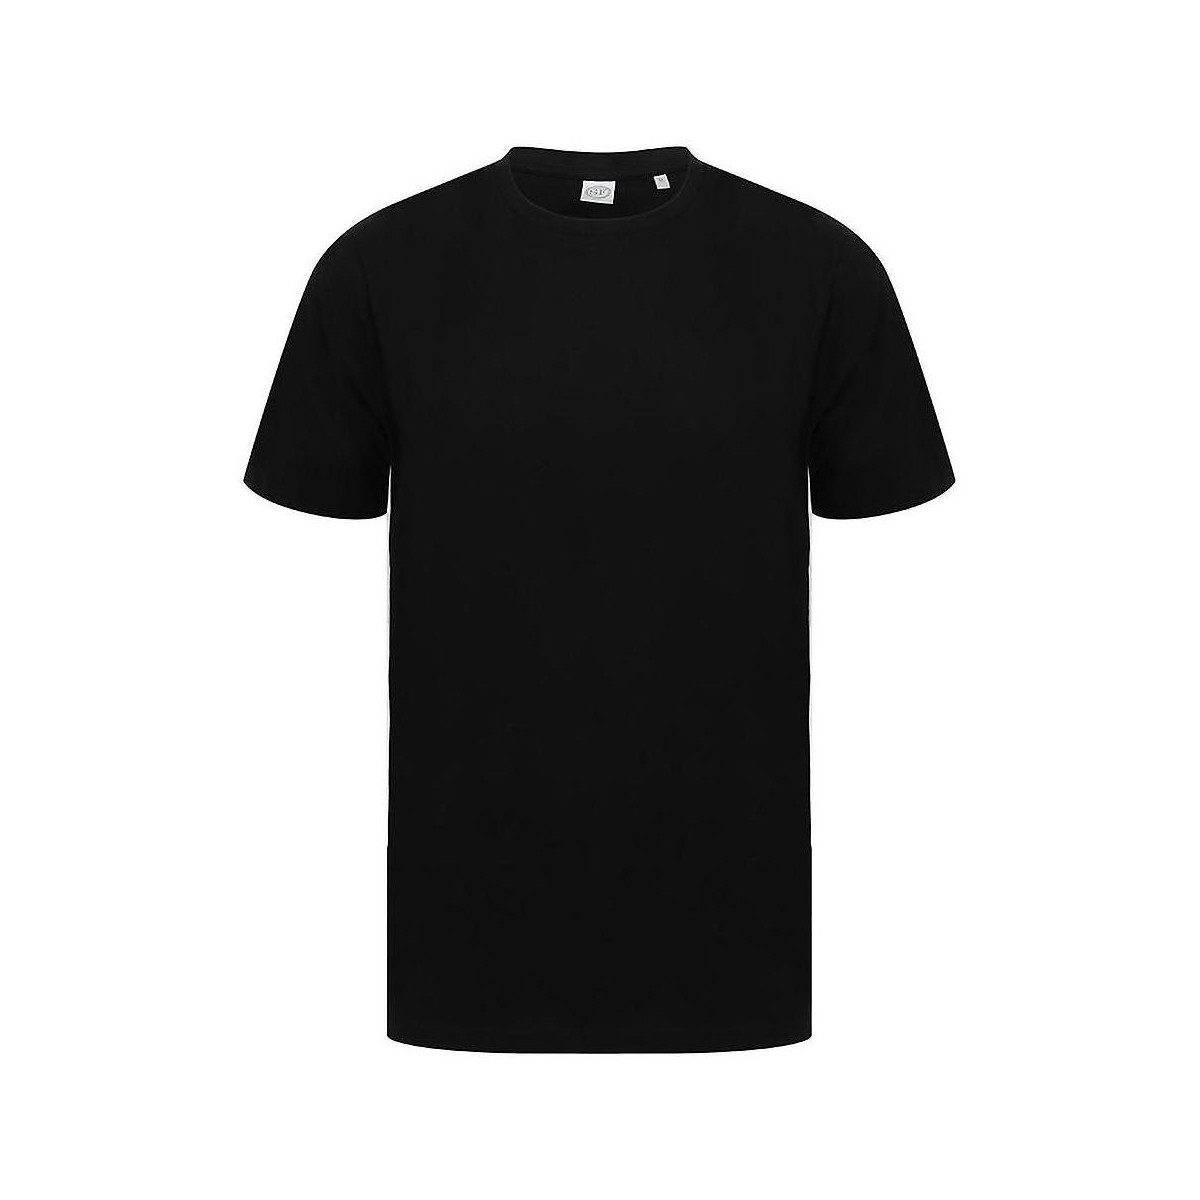 Vêtements T-shirts manches longues Sf SF253 Noir